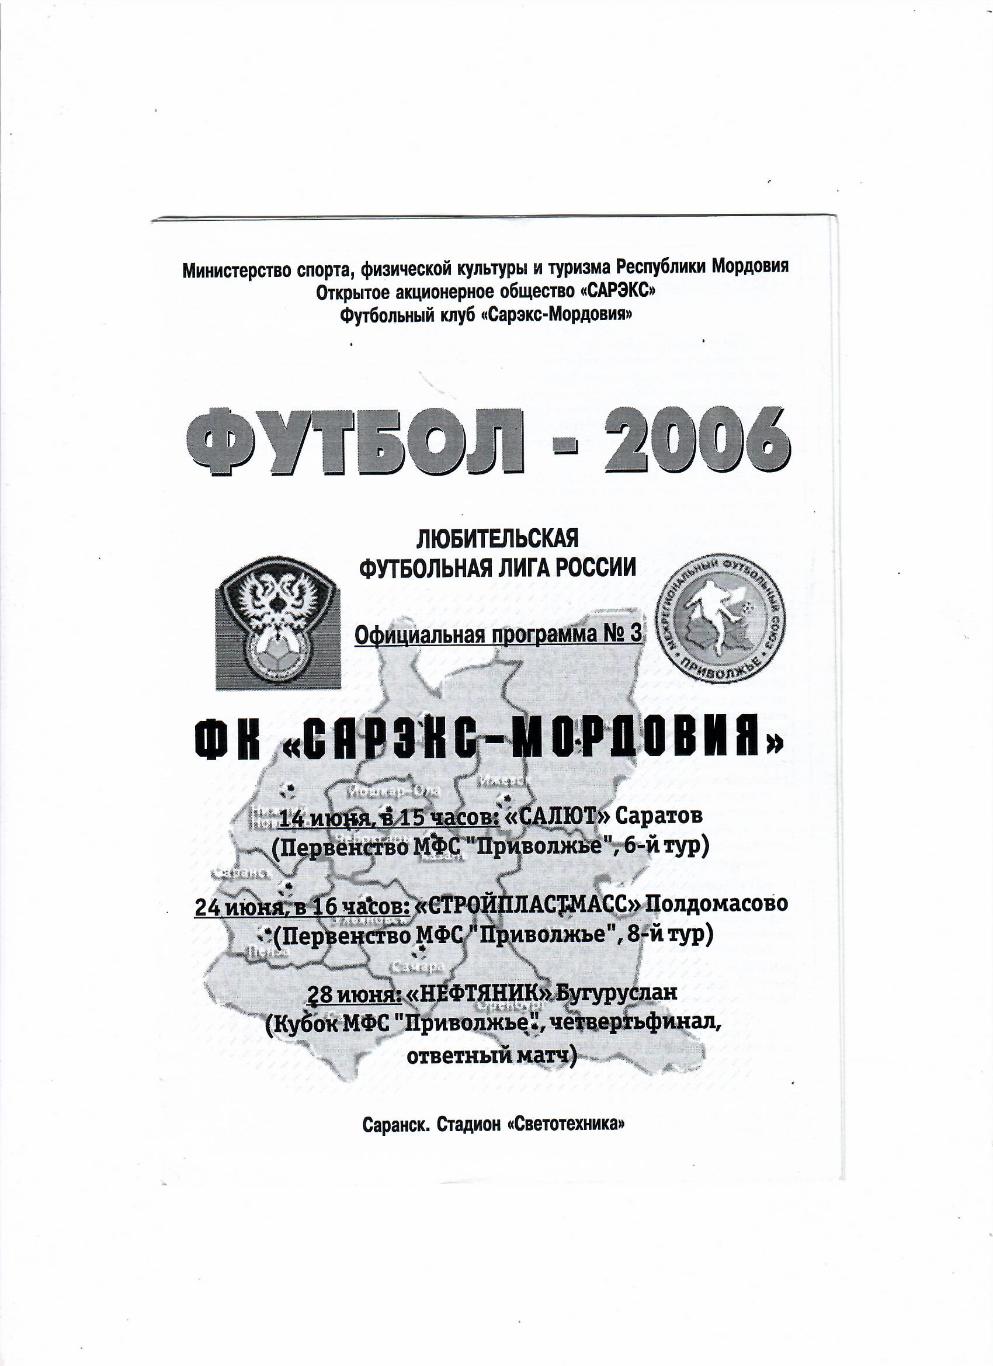 Сарэкс-Мордовия Саранск-Саратов/Полдомасово/ Бугуруслан 2006